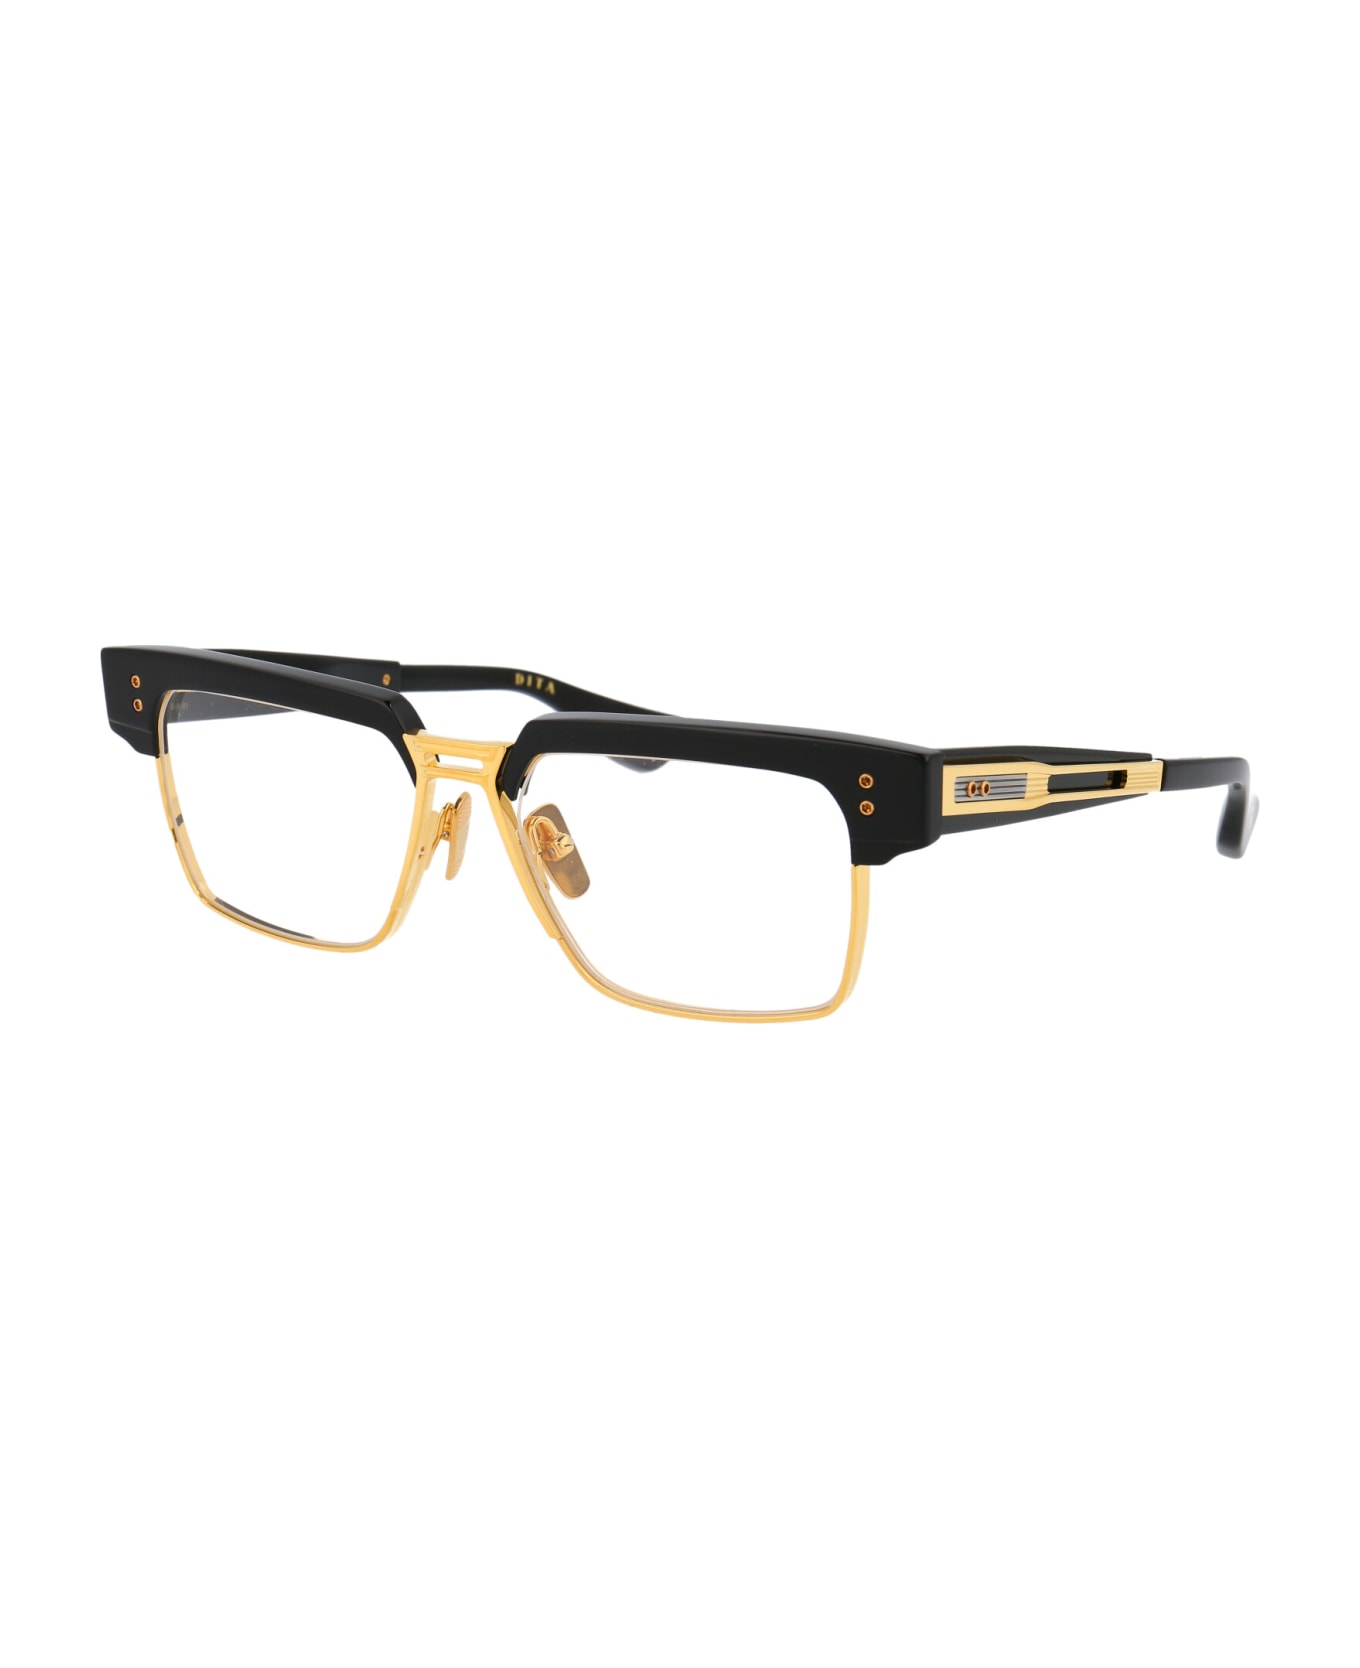 Dita Hakatron Glasses - Yellow Gold - Black